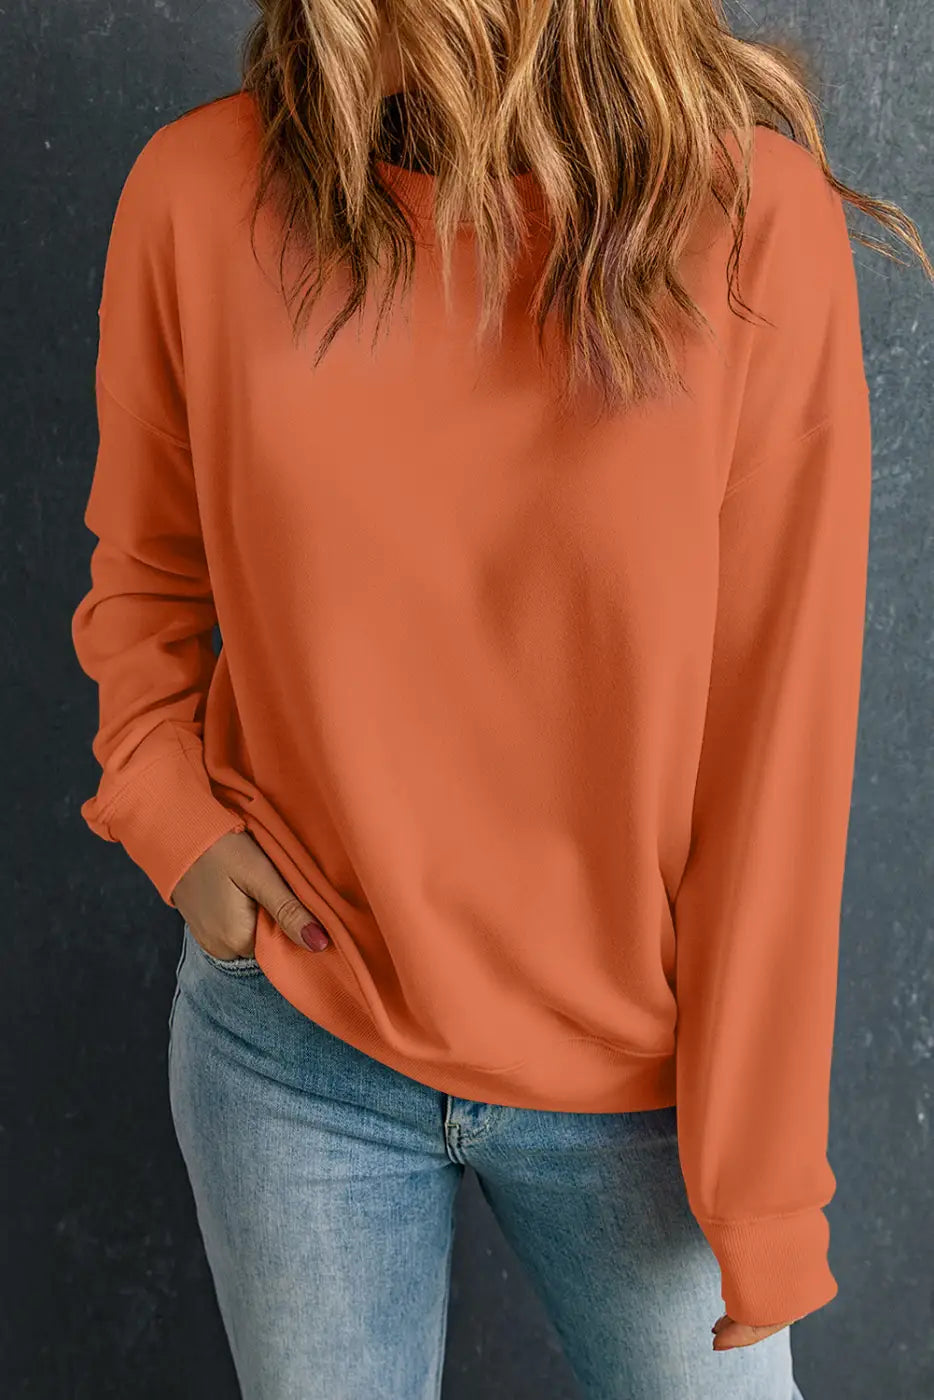 Vintage vibe sweatshirt - orange / s / 50% polyester + 50% cotton - sweatshirts